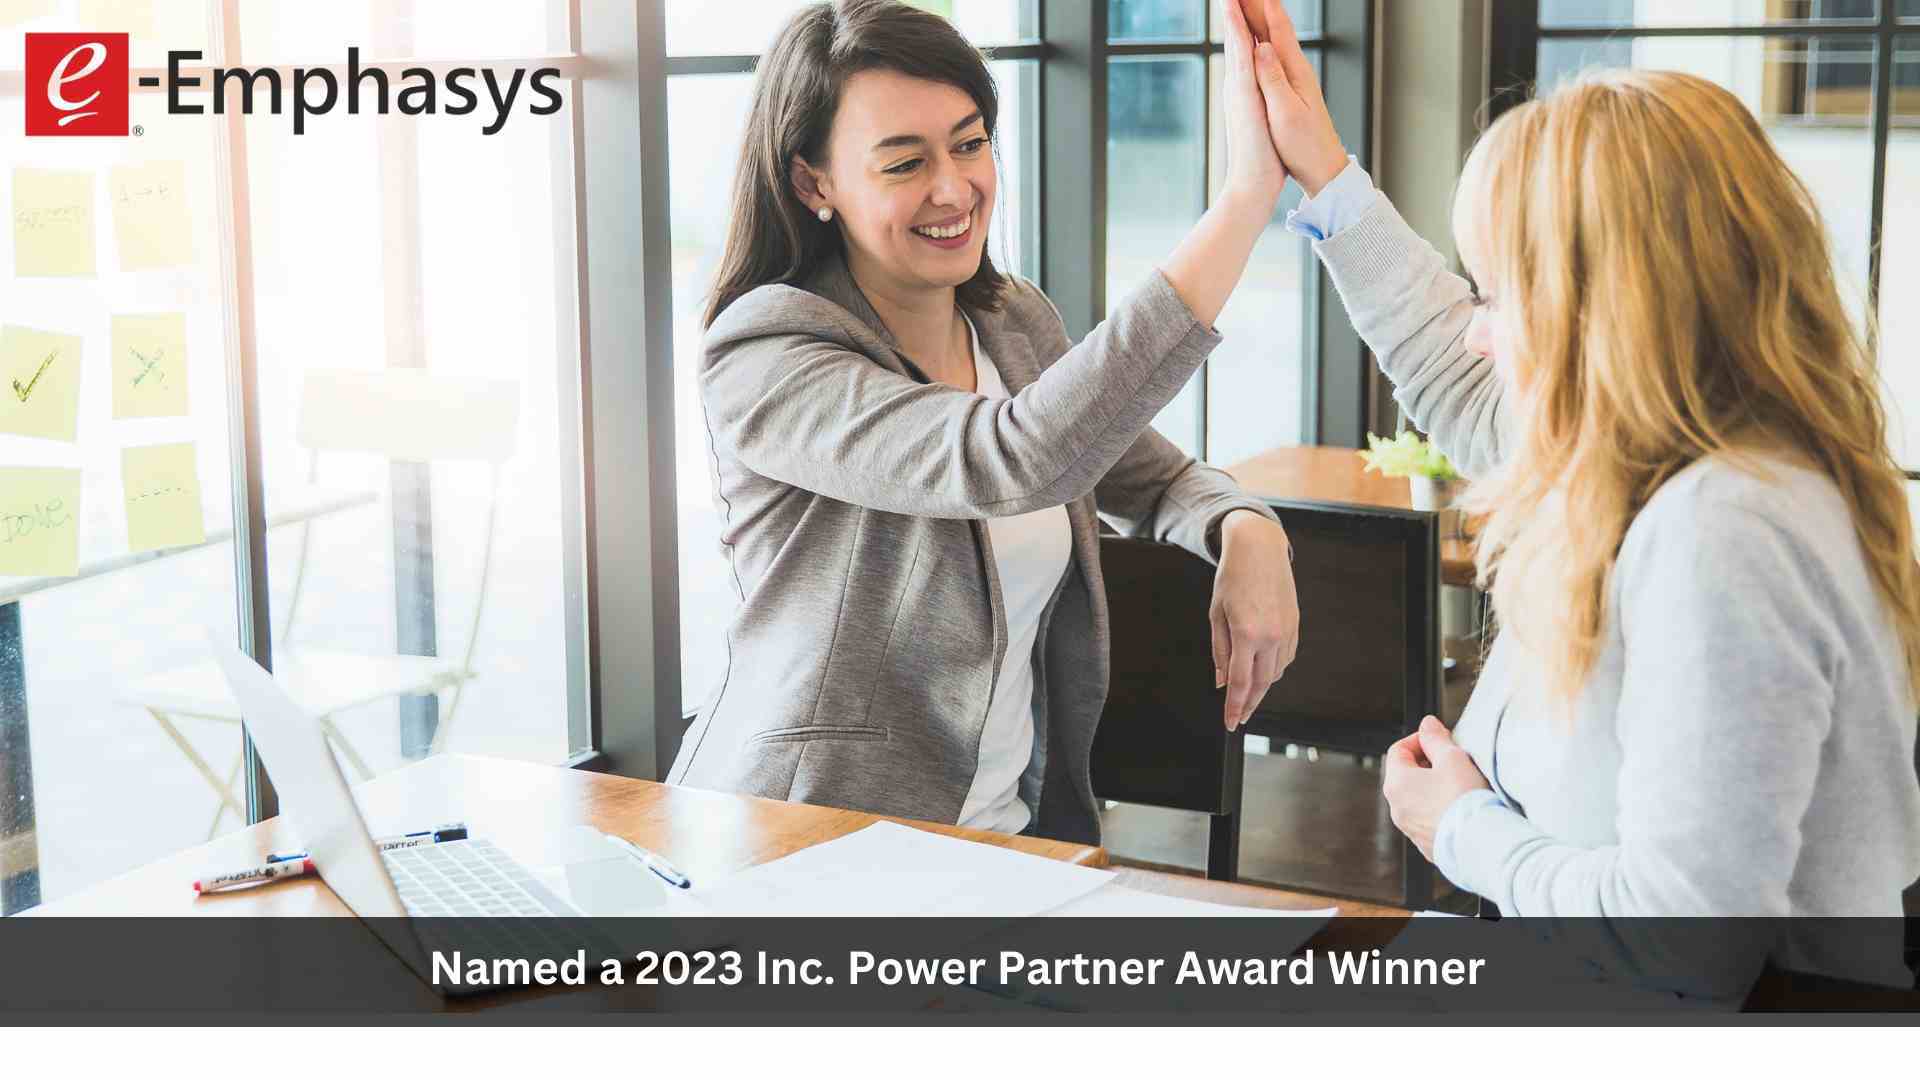 e-Emphasys Named a 2023 Inc. Power Partner Award Winner